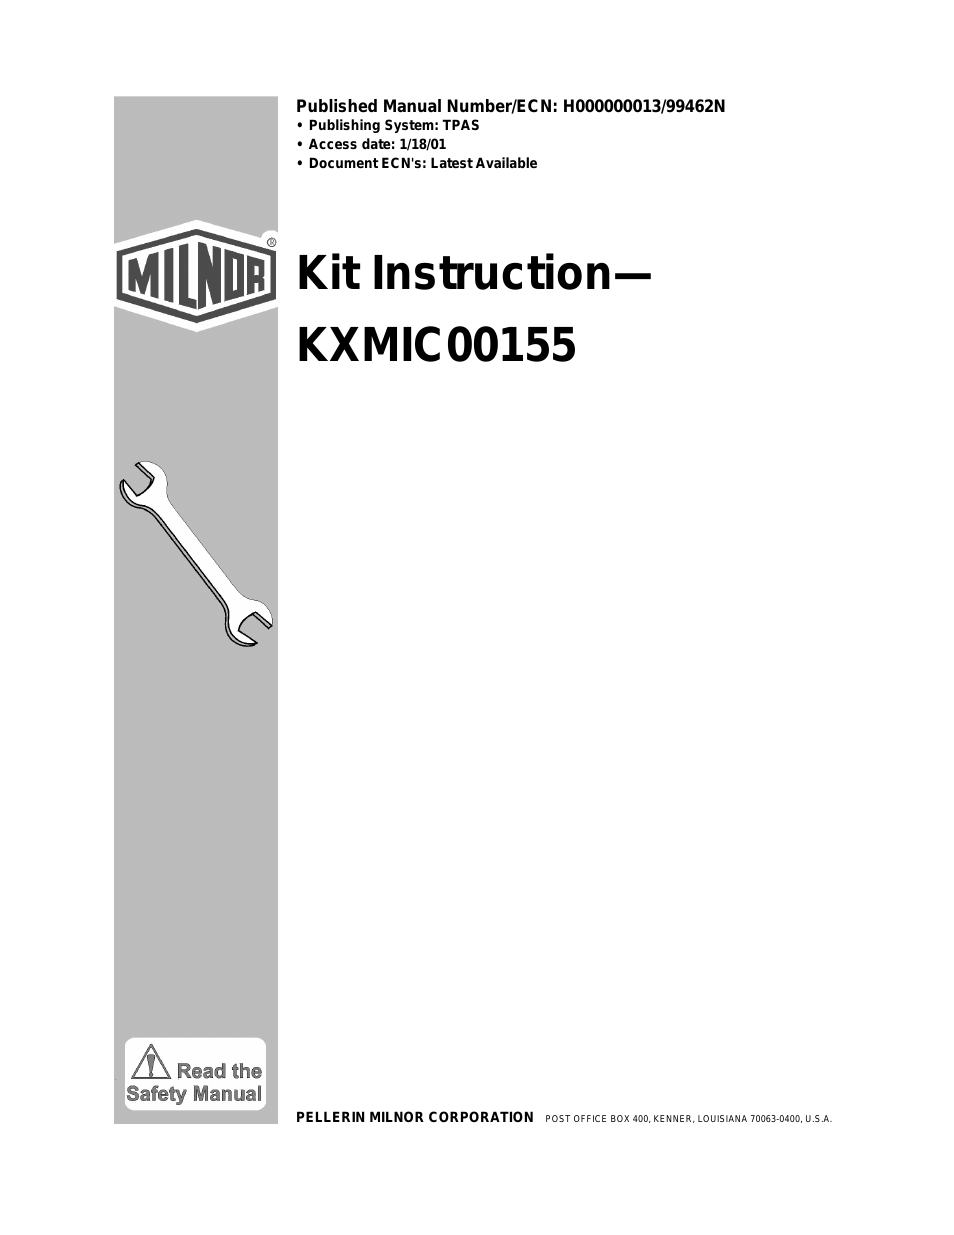 KXMIC00155